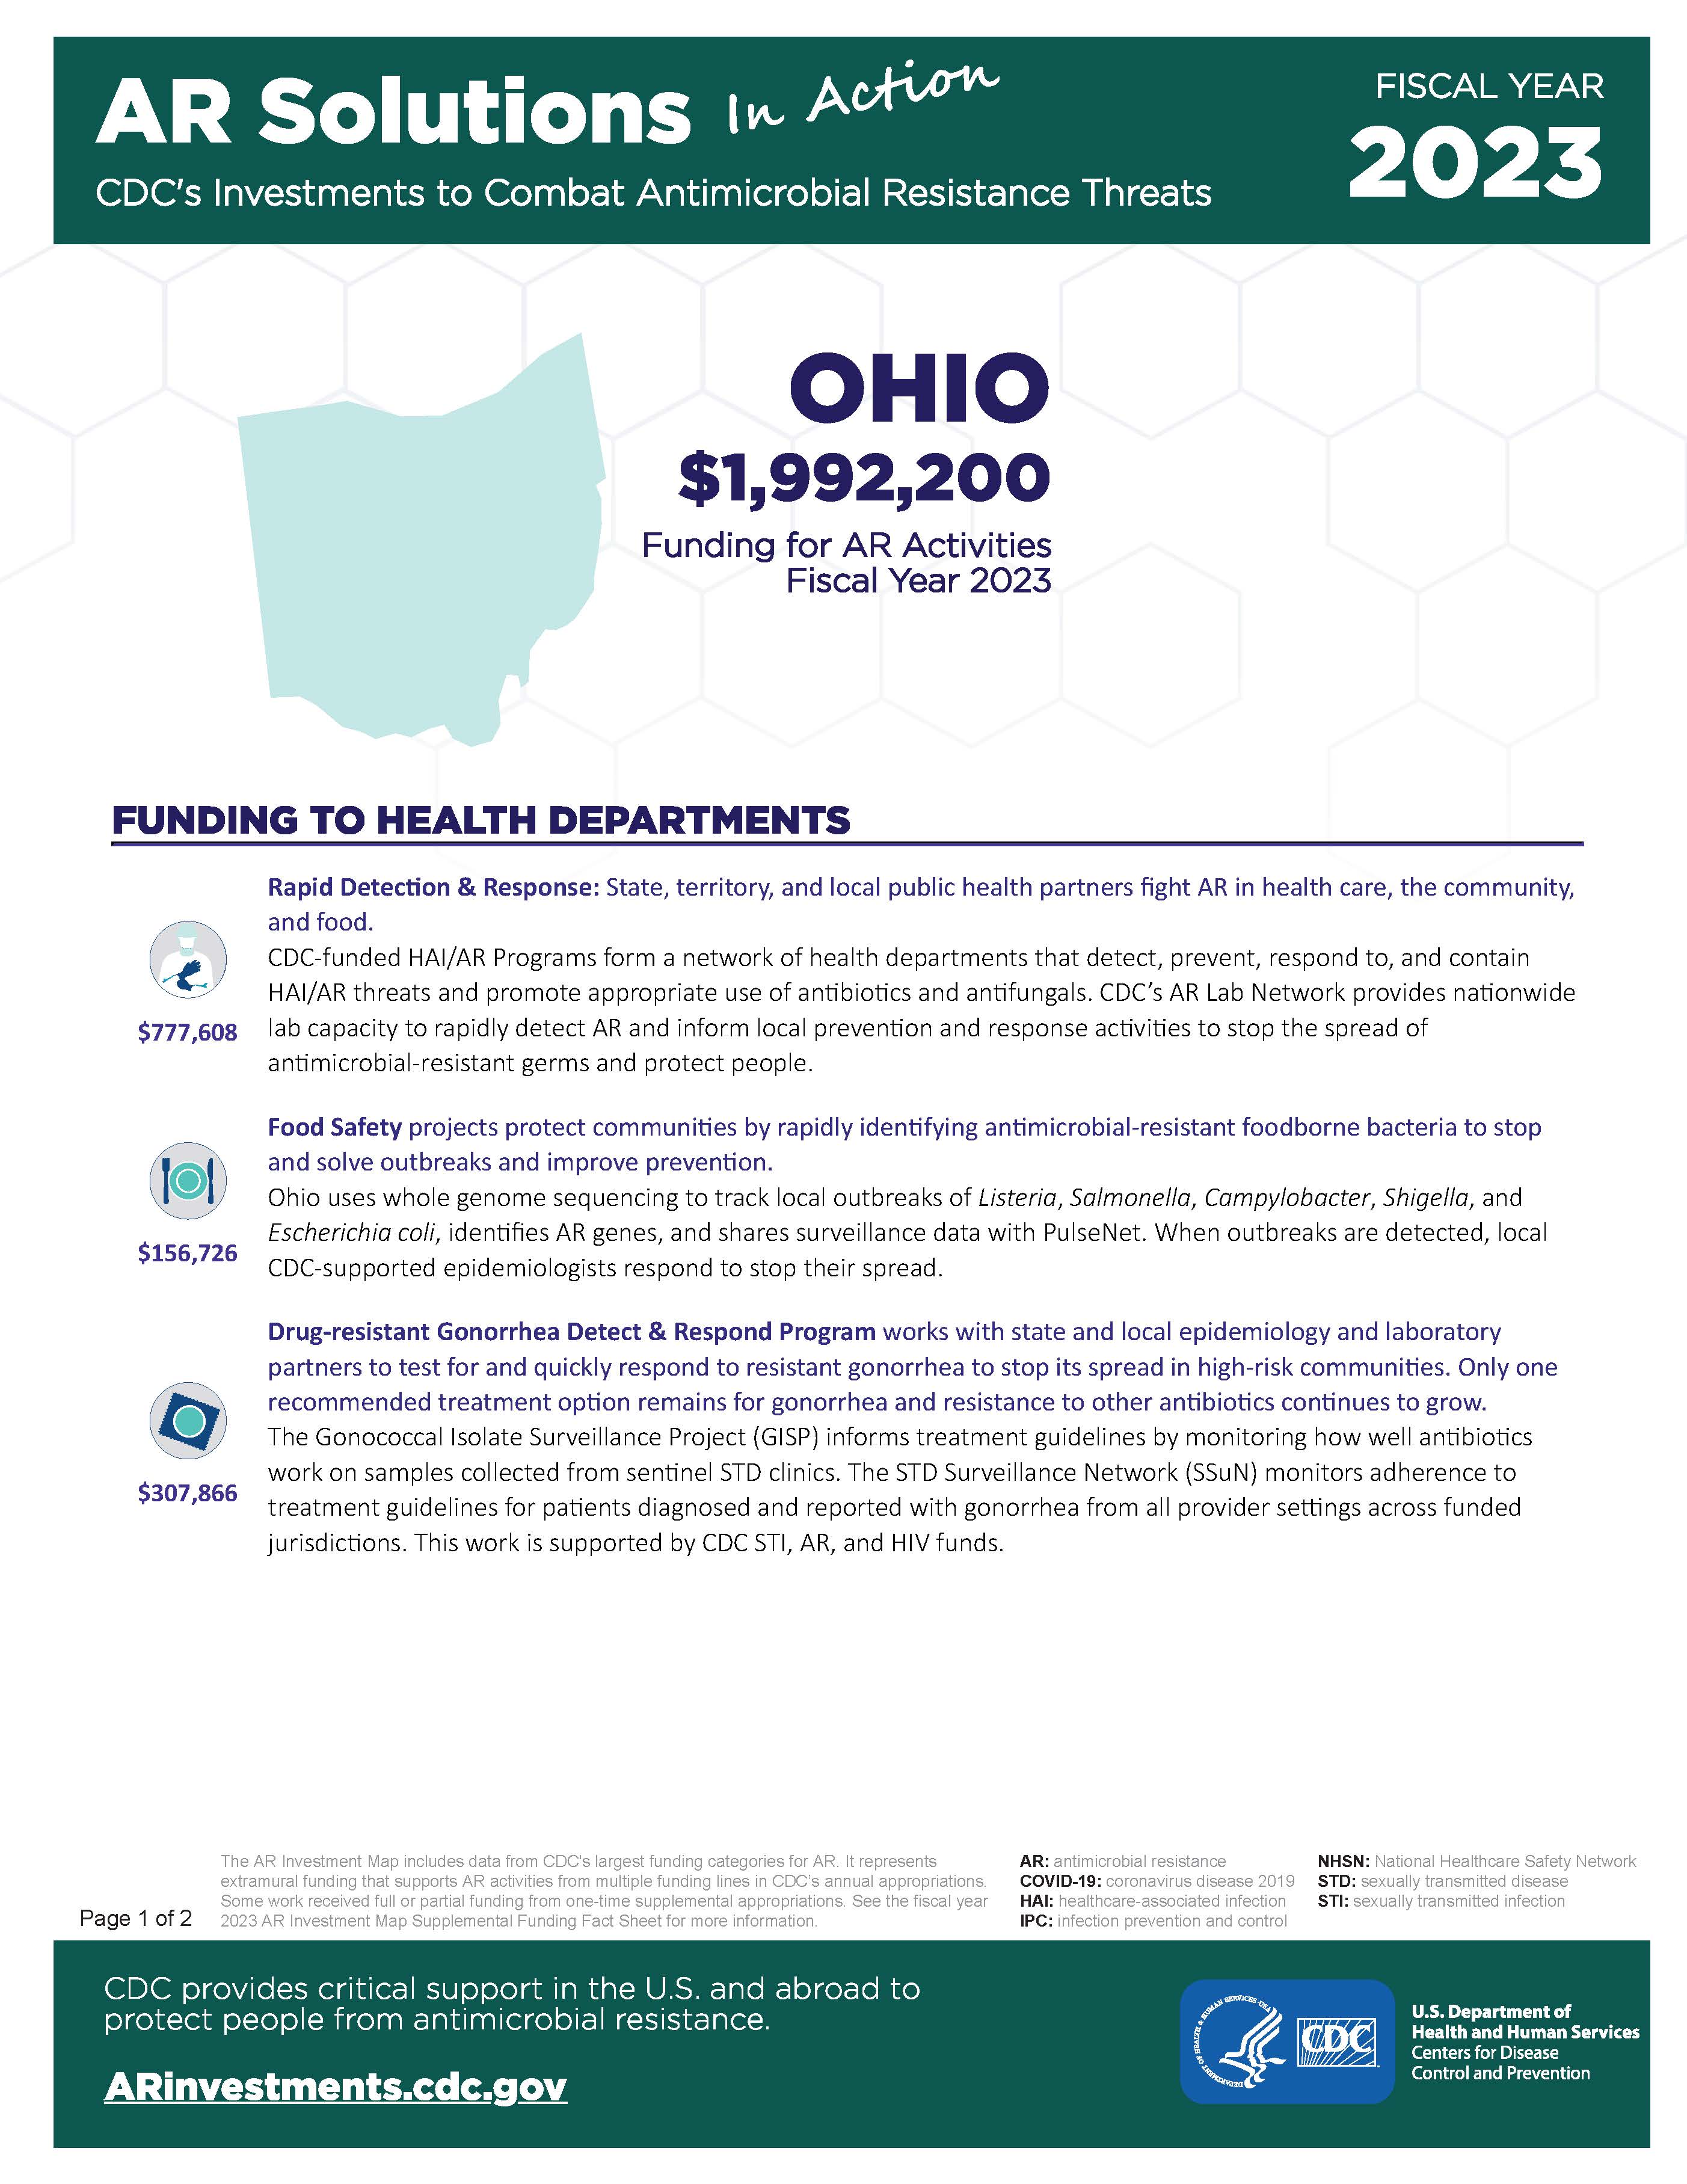 View Factsheet for Ohio